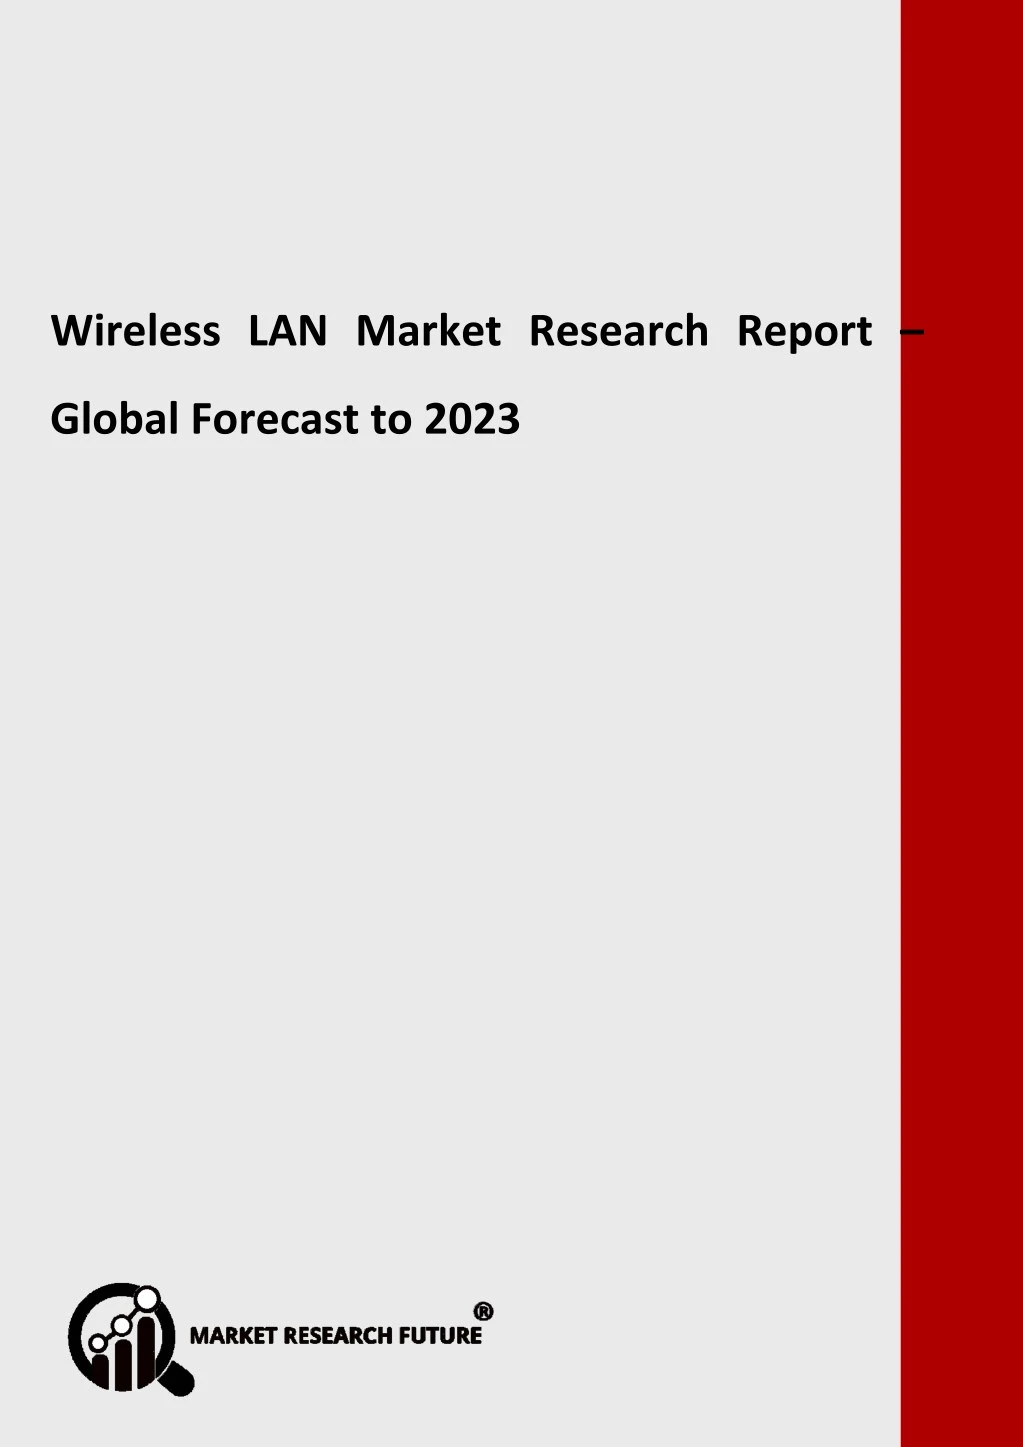 wireless lan market research report global